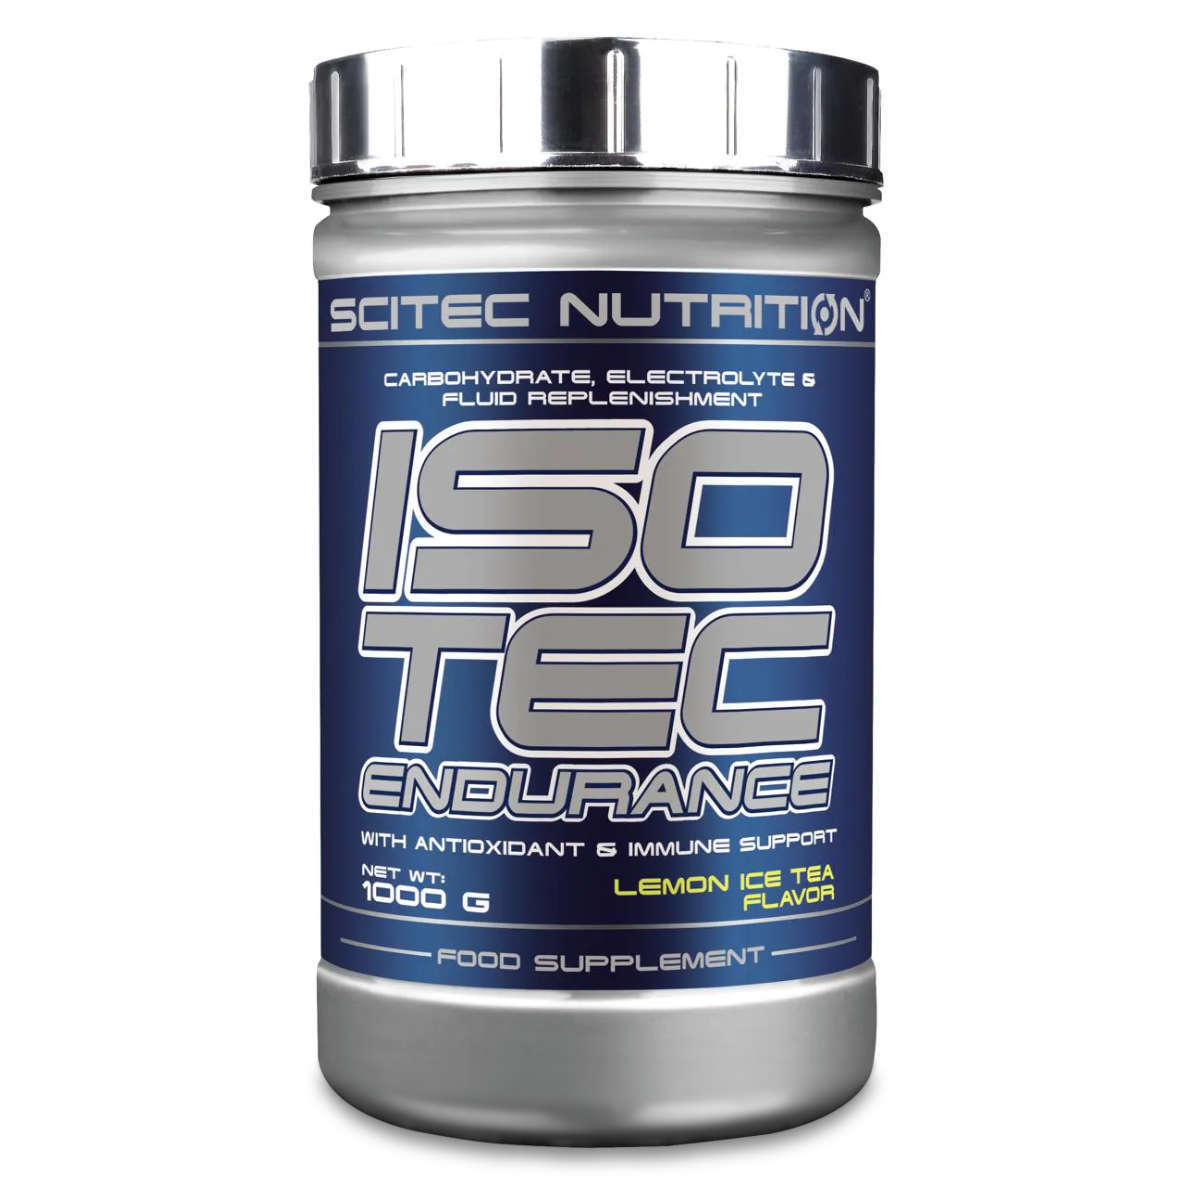 Scitec Nutrition Isotec Endurance (1000g Dose)